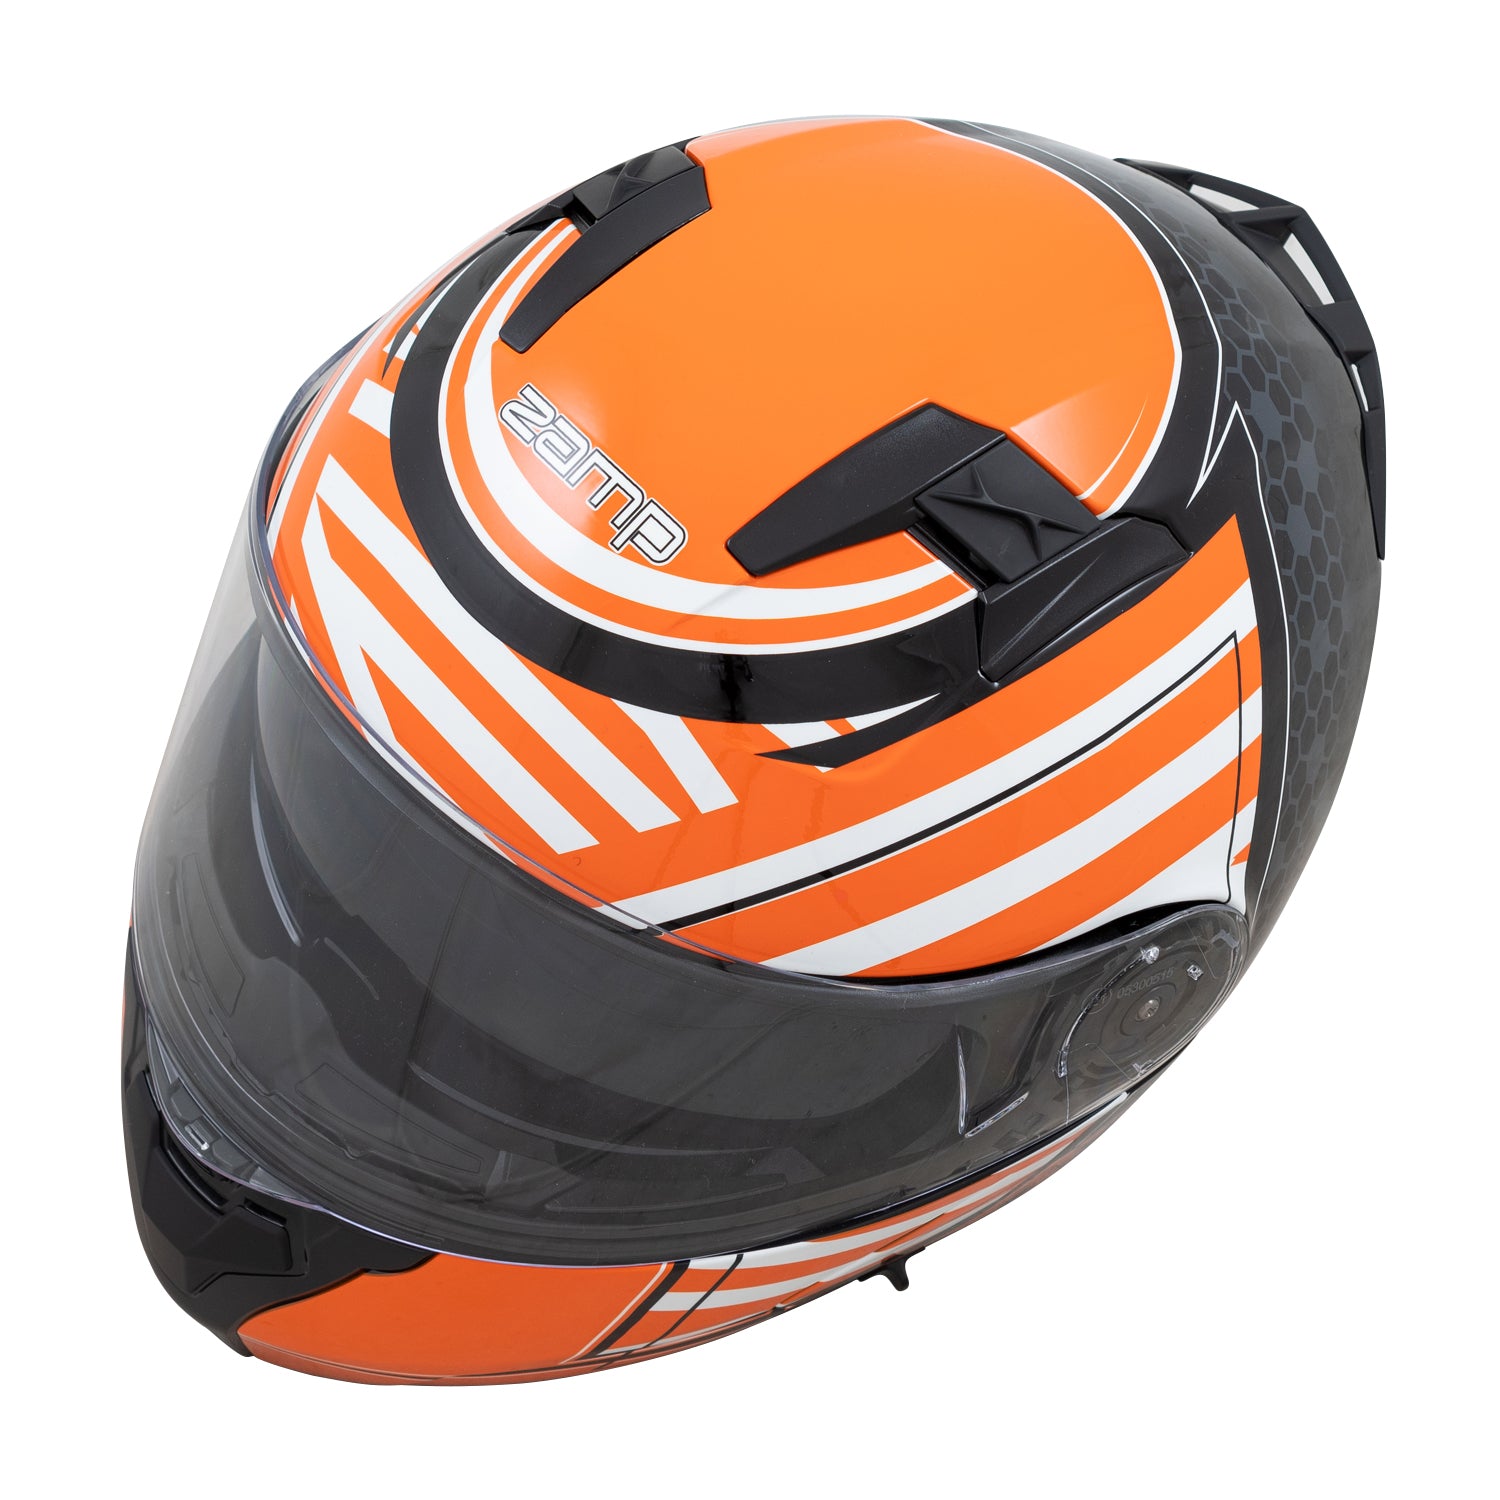 Zamp FL-4 Graphic Helmet, ECE22.05 & DOT